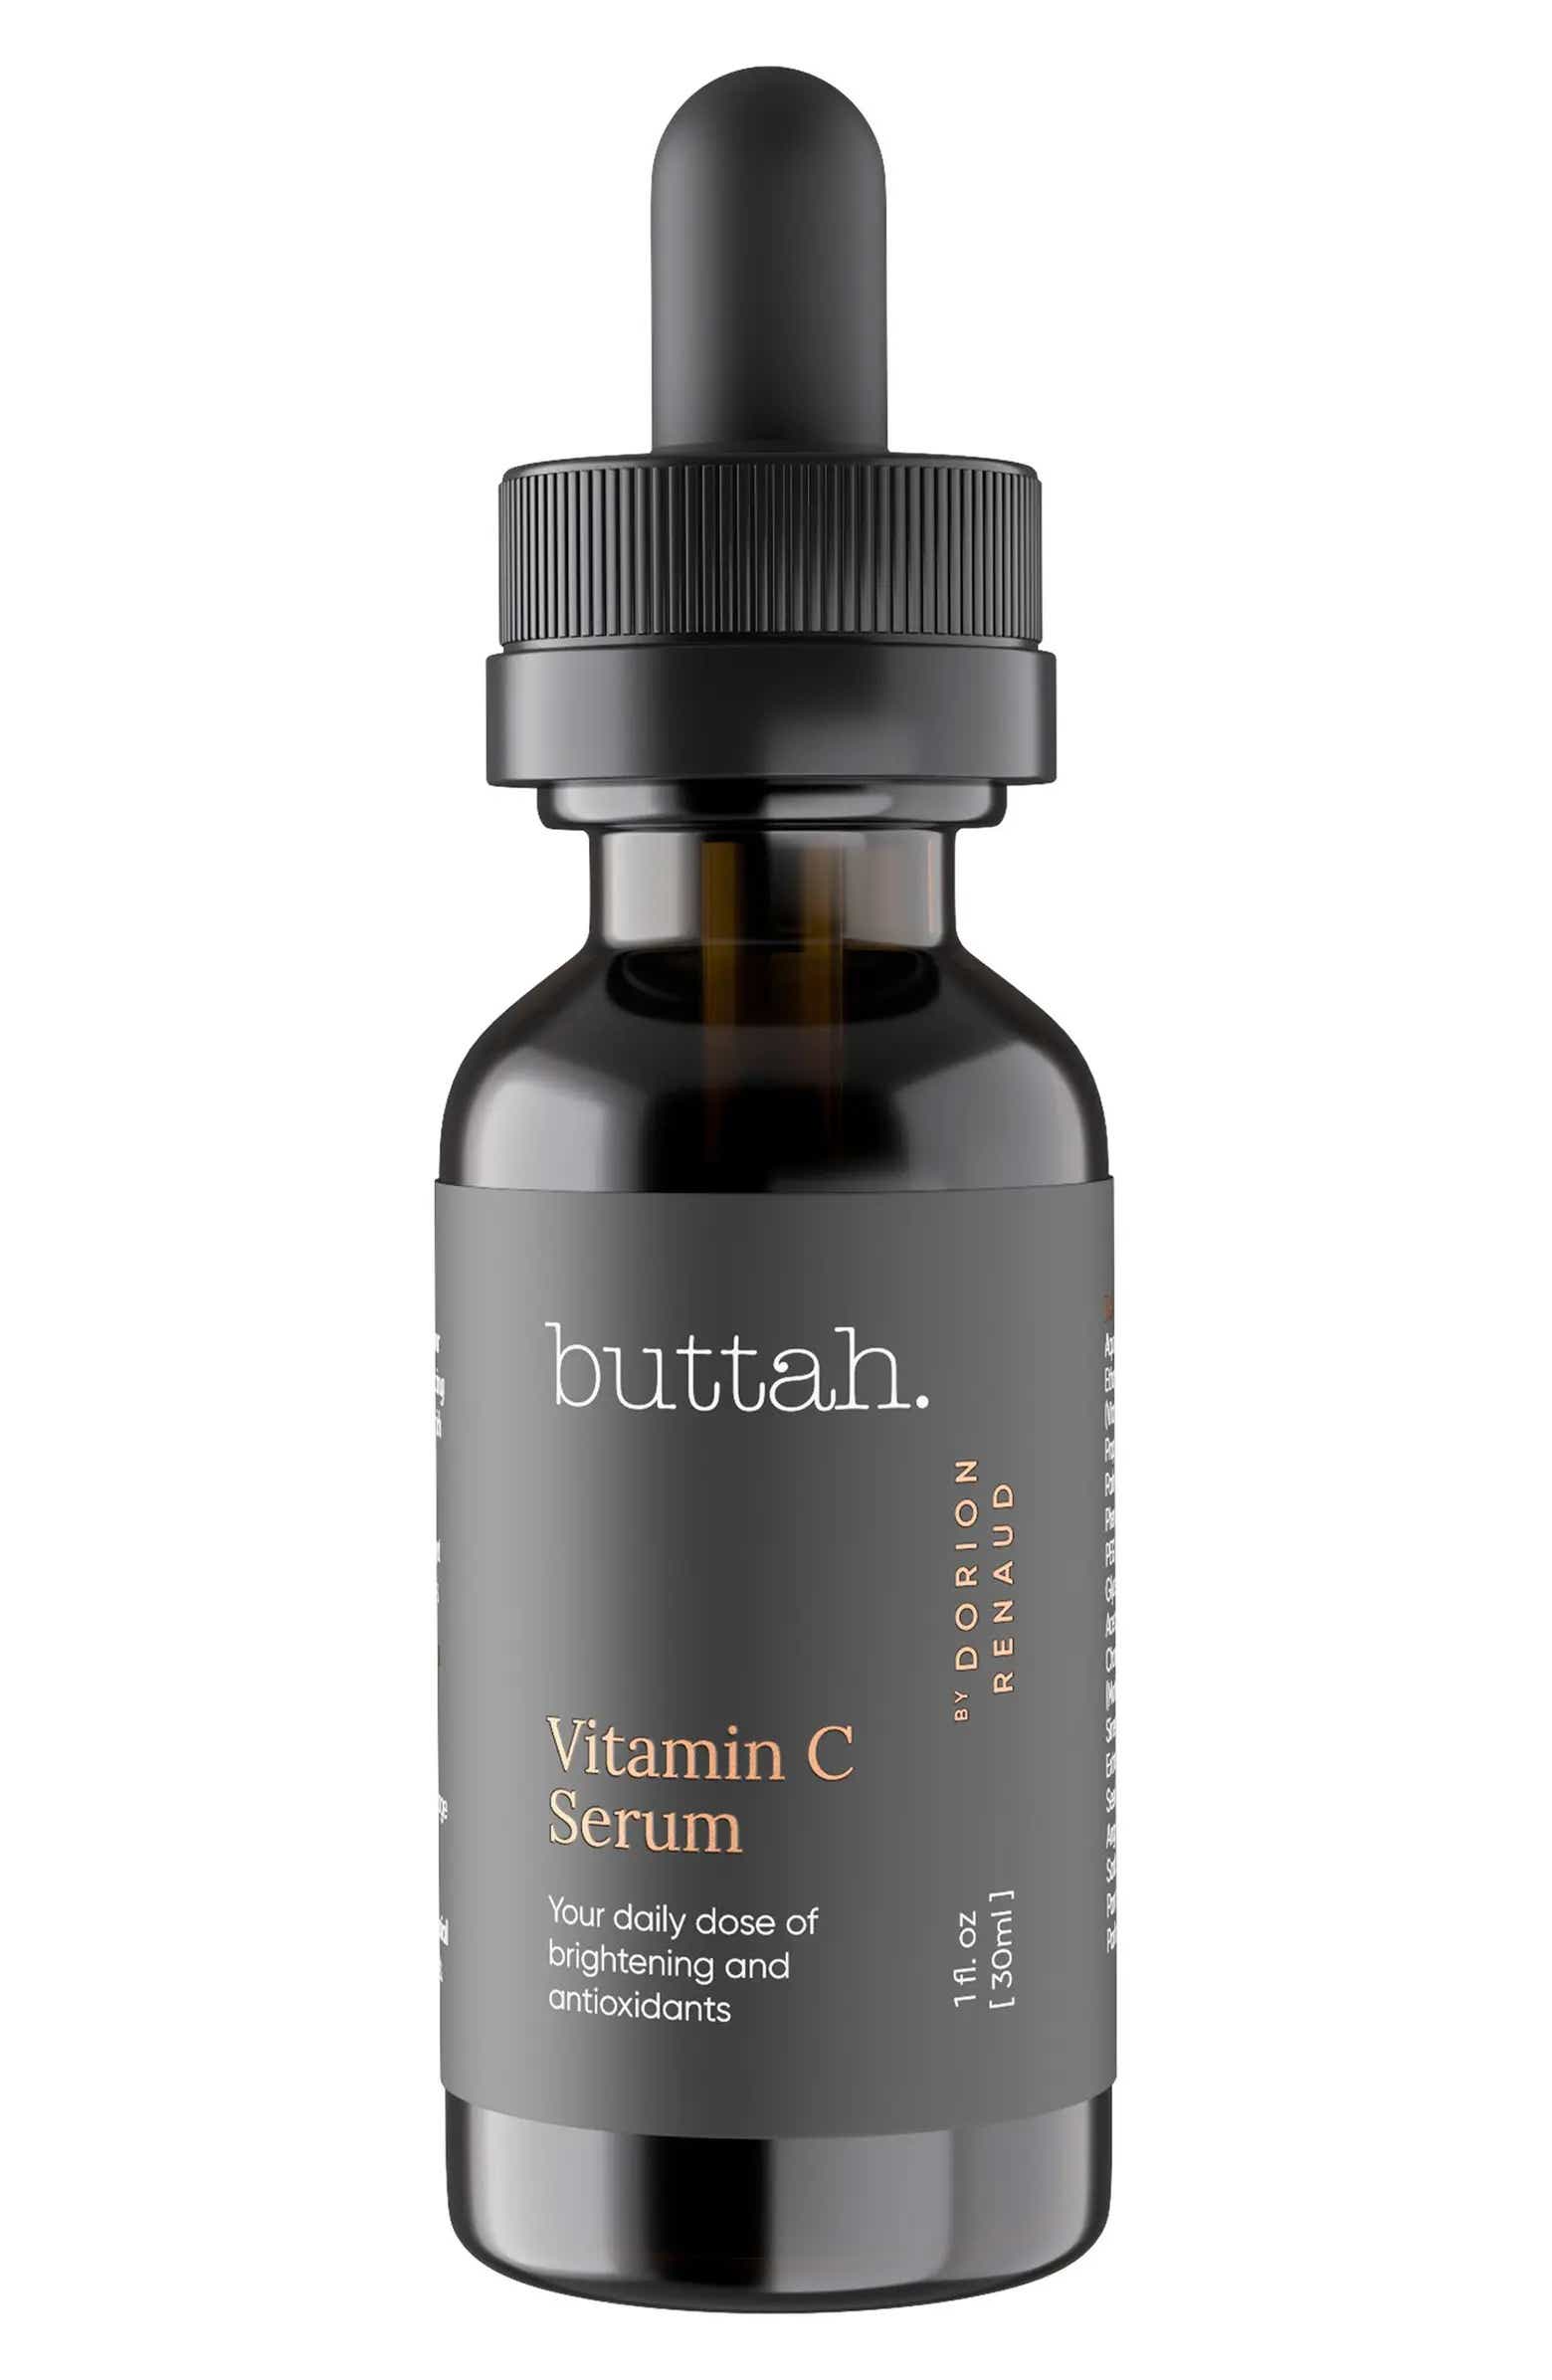 buttah skin vitamin c serum in amber bottle on white background